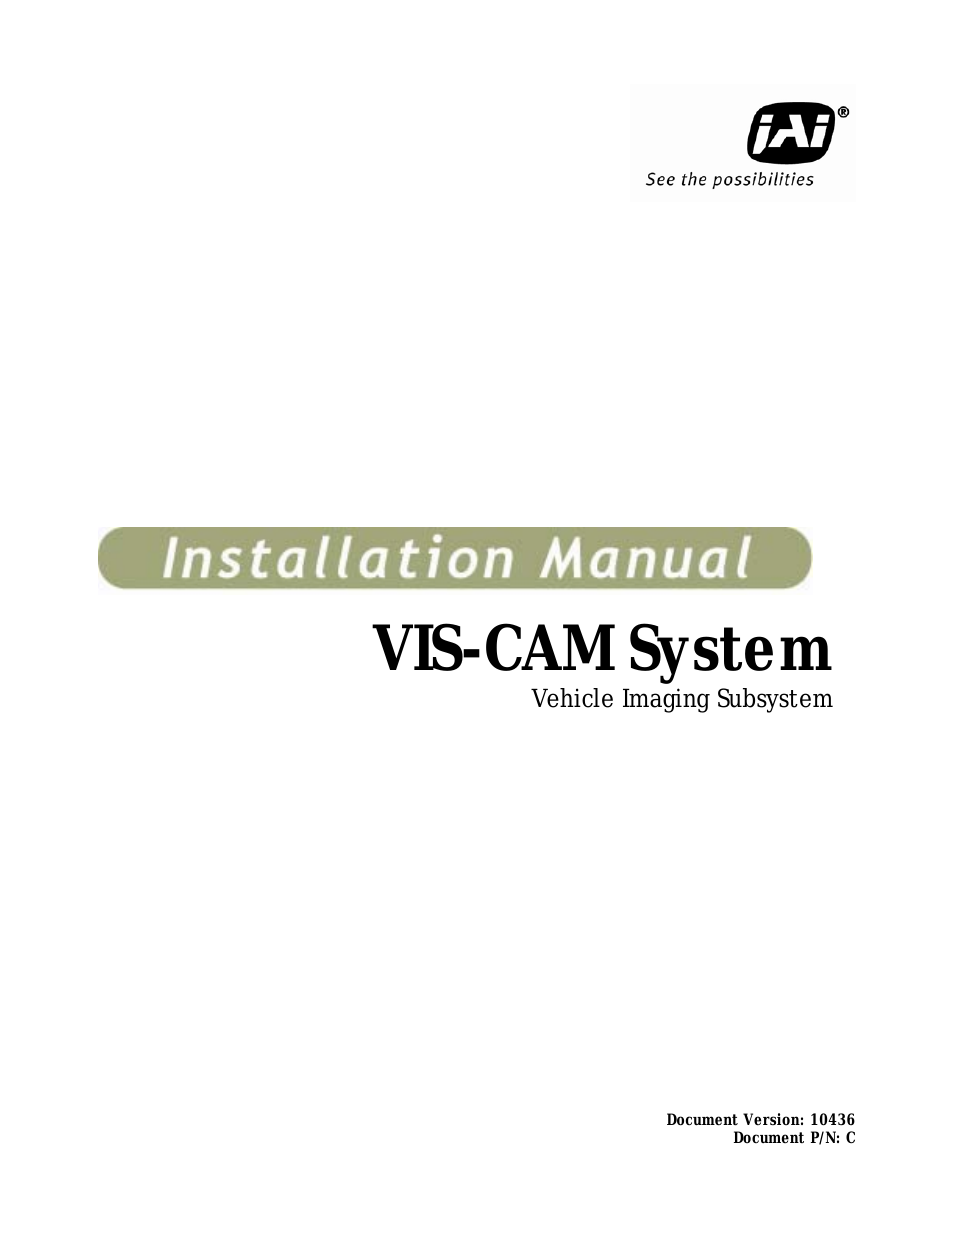 VIS-CAM System TS-2030EN